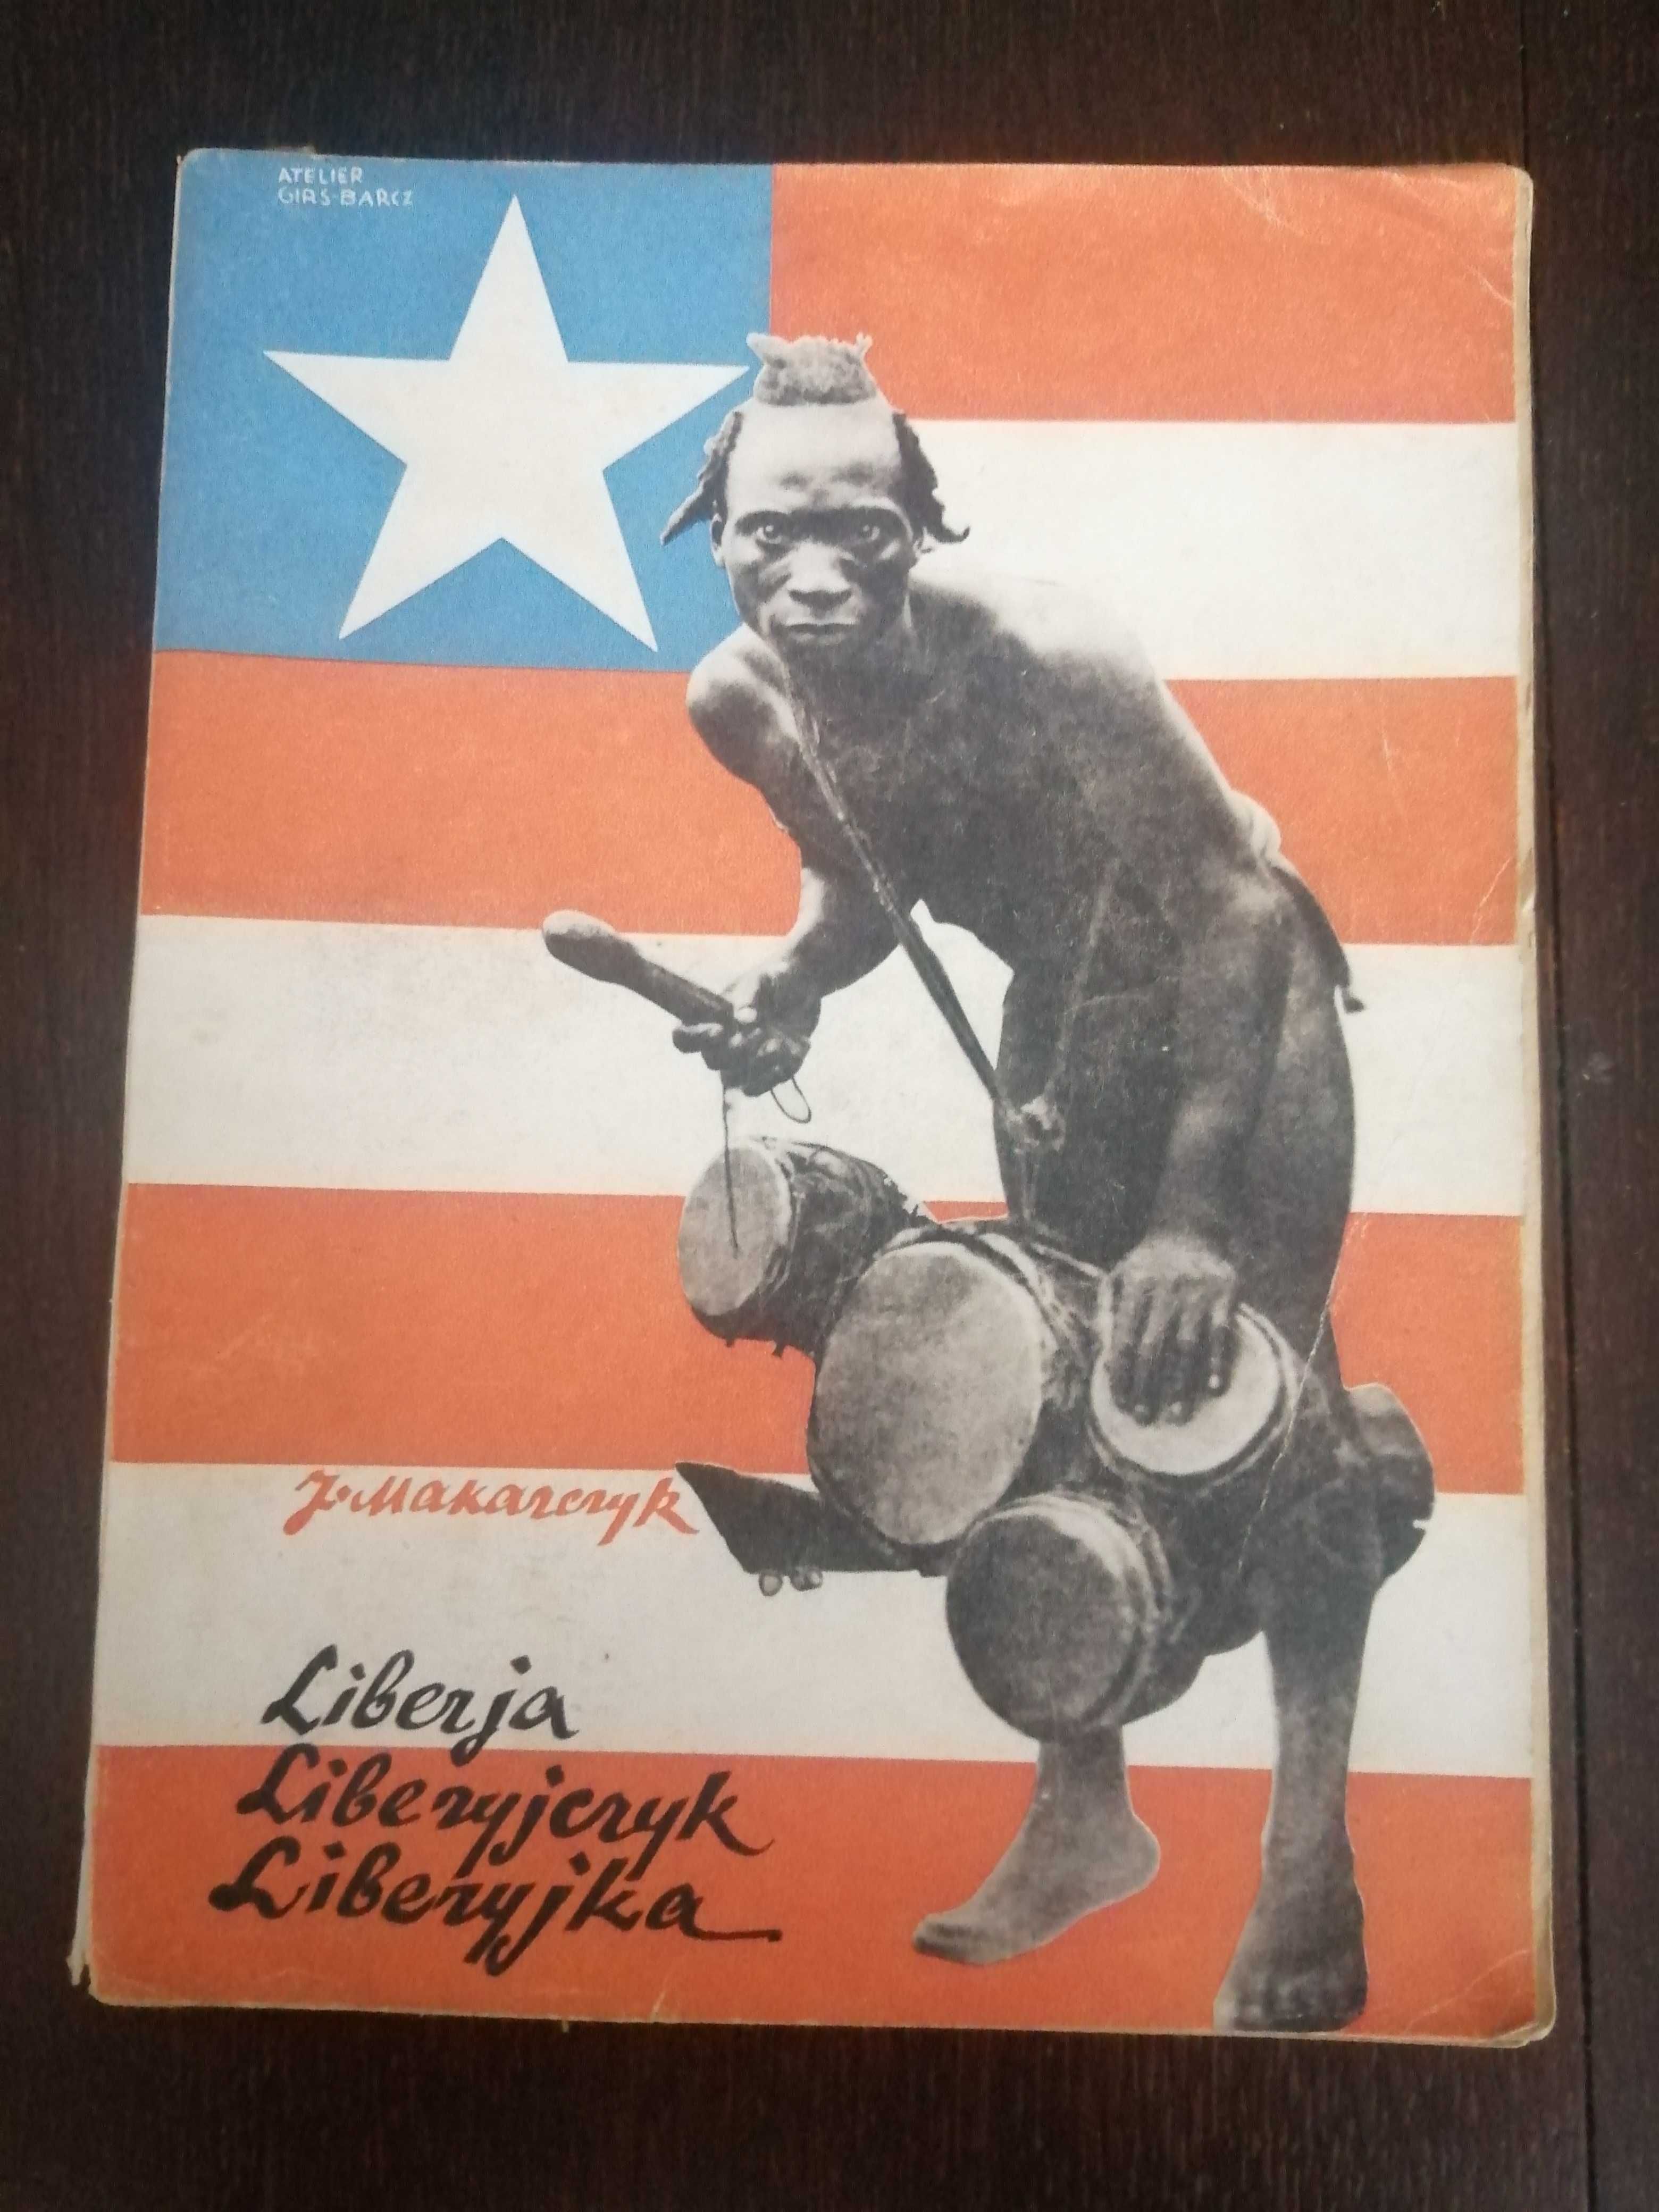 J. Makarczyk, Liberja, Liberyjczyk, Liberyjka, 1936